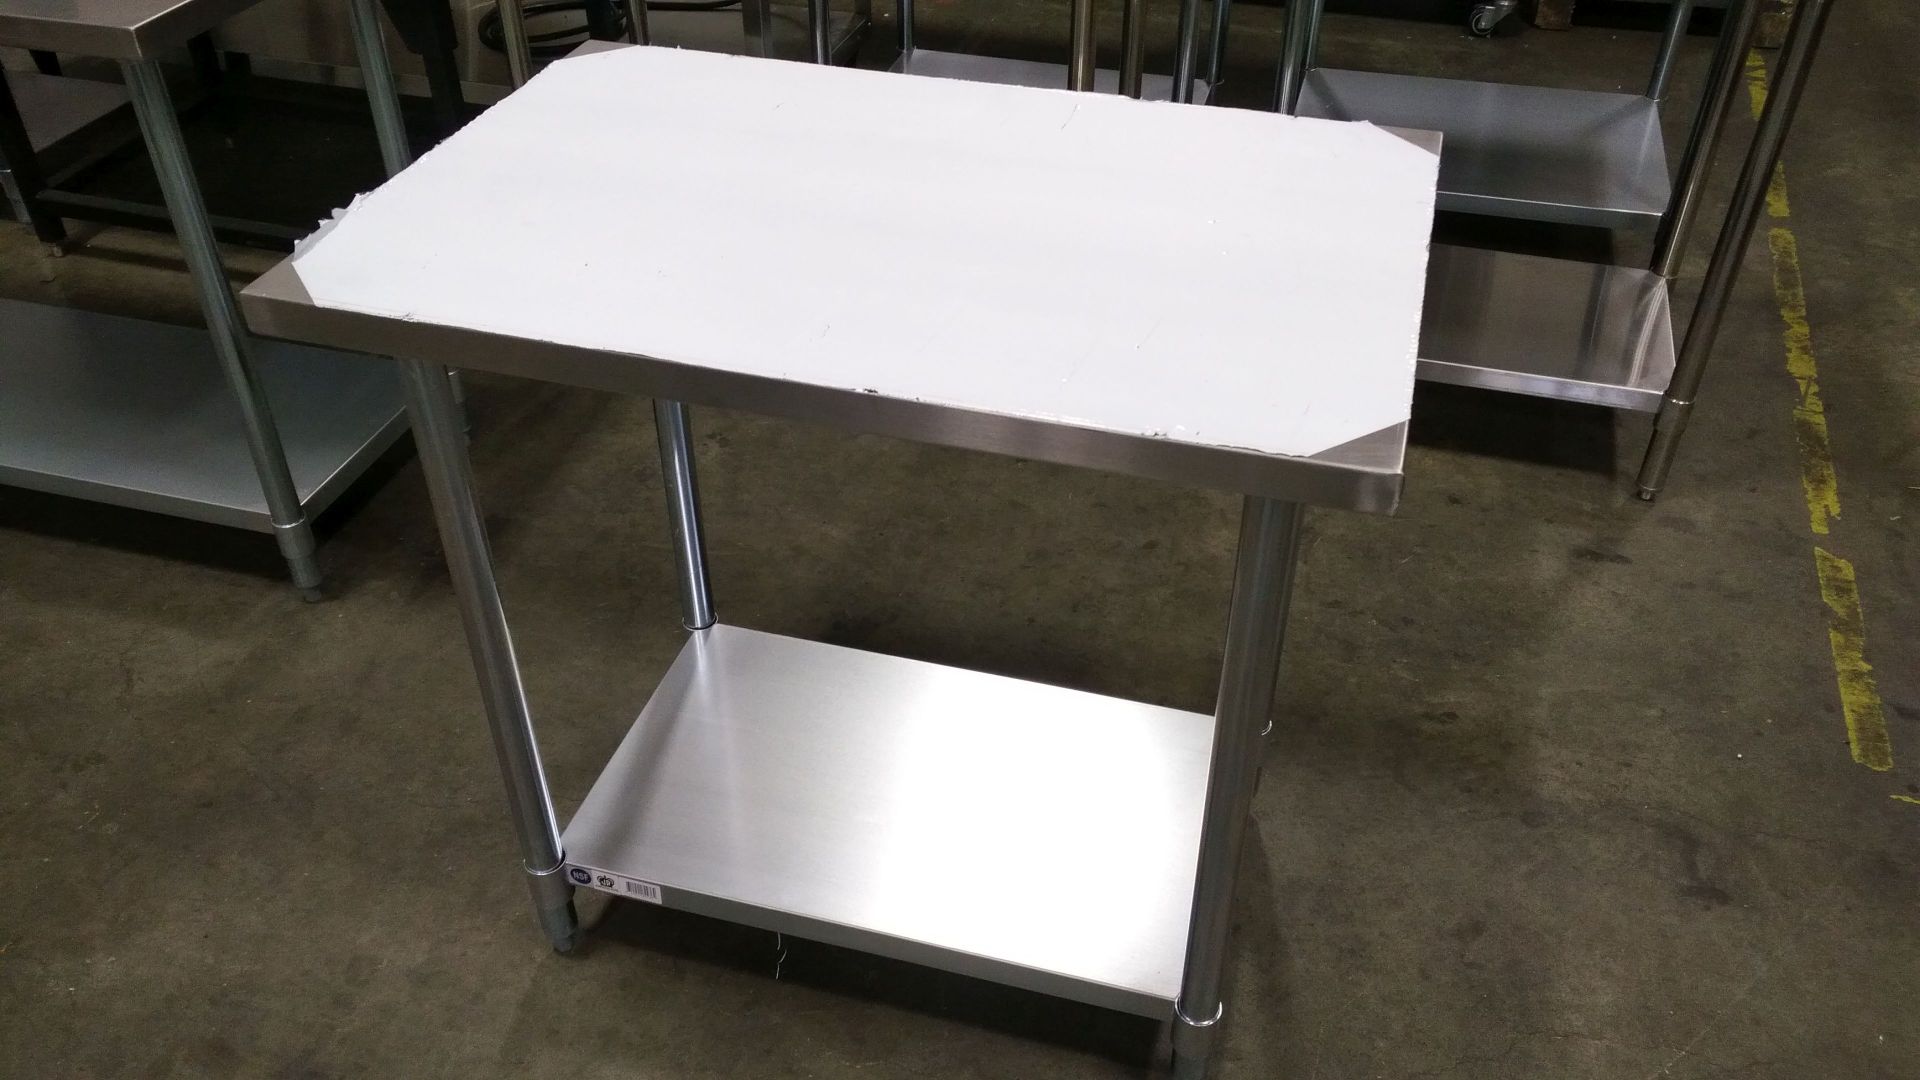 24" x 36" Stainless Steel Work Table, Galvanized Undershelf - Image 3 of 3